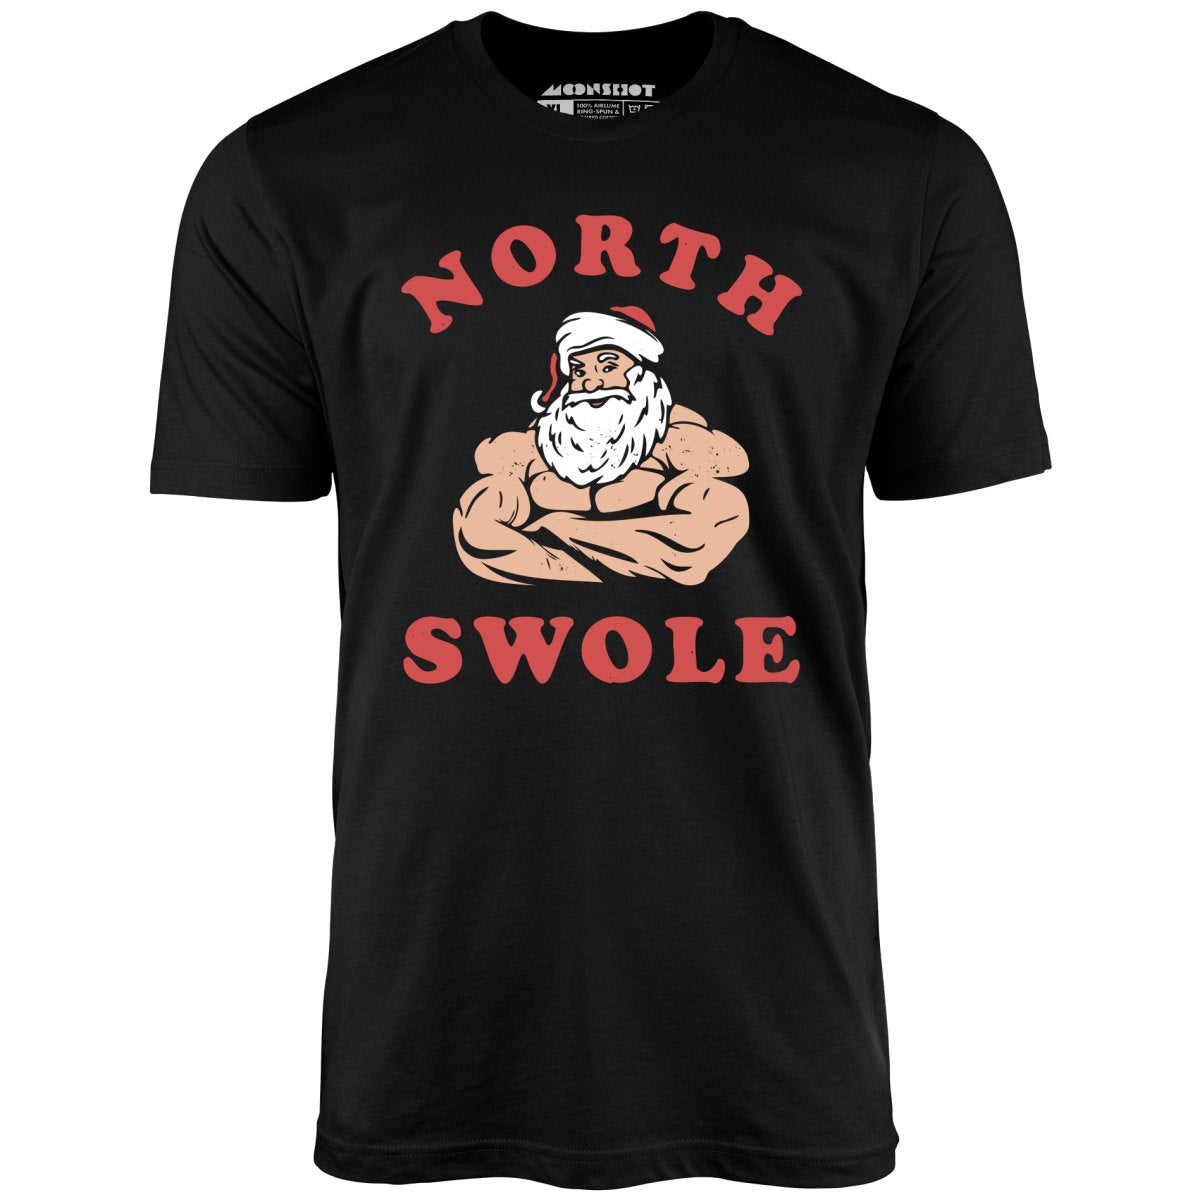 North Swole - Unisex T-Shirt